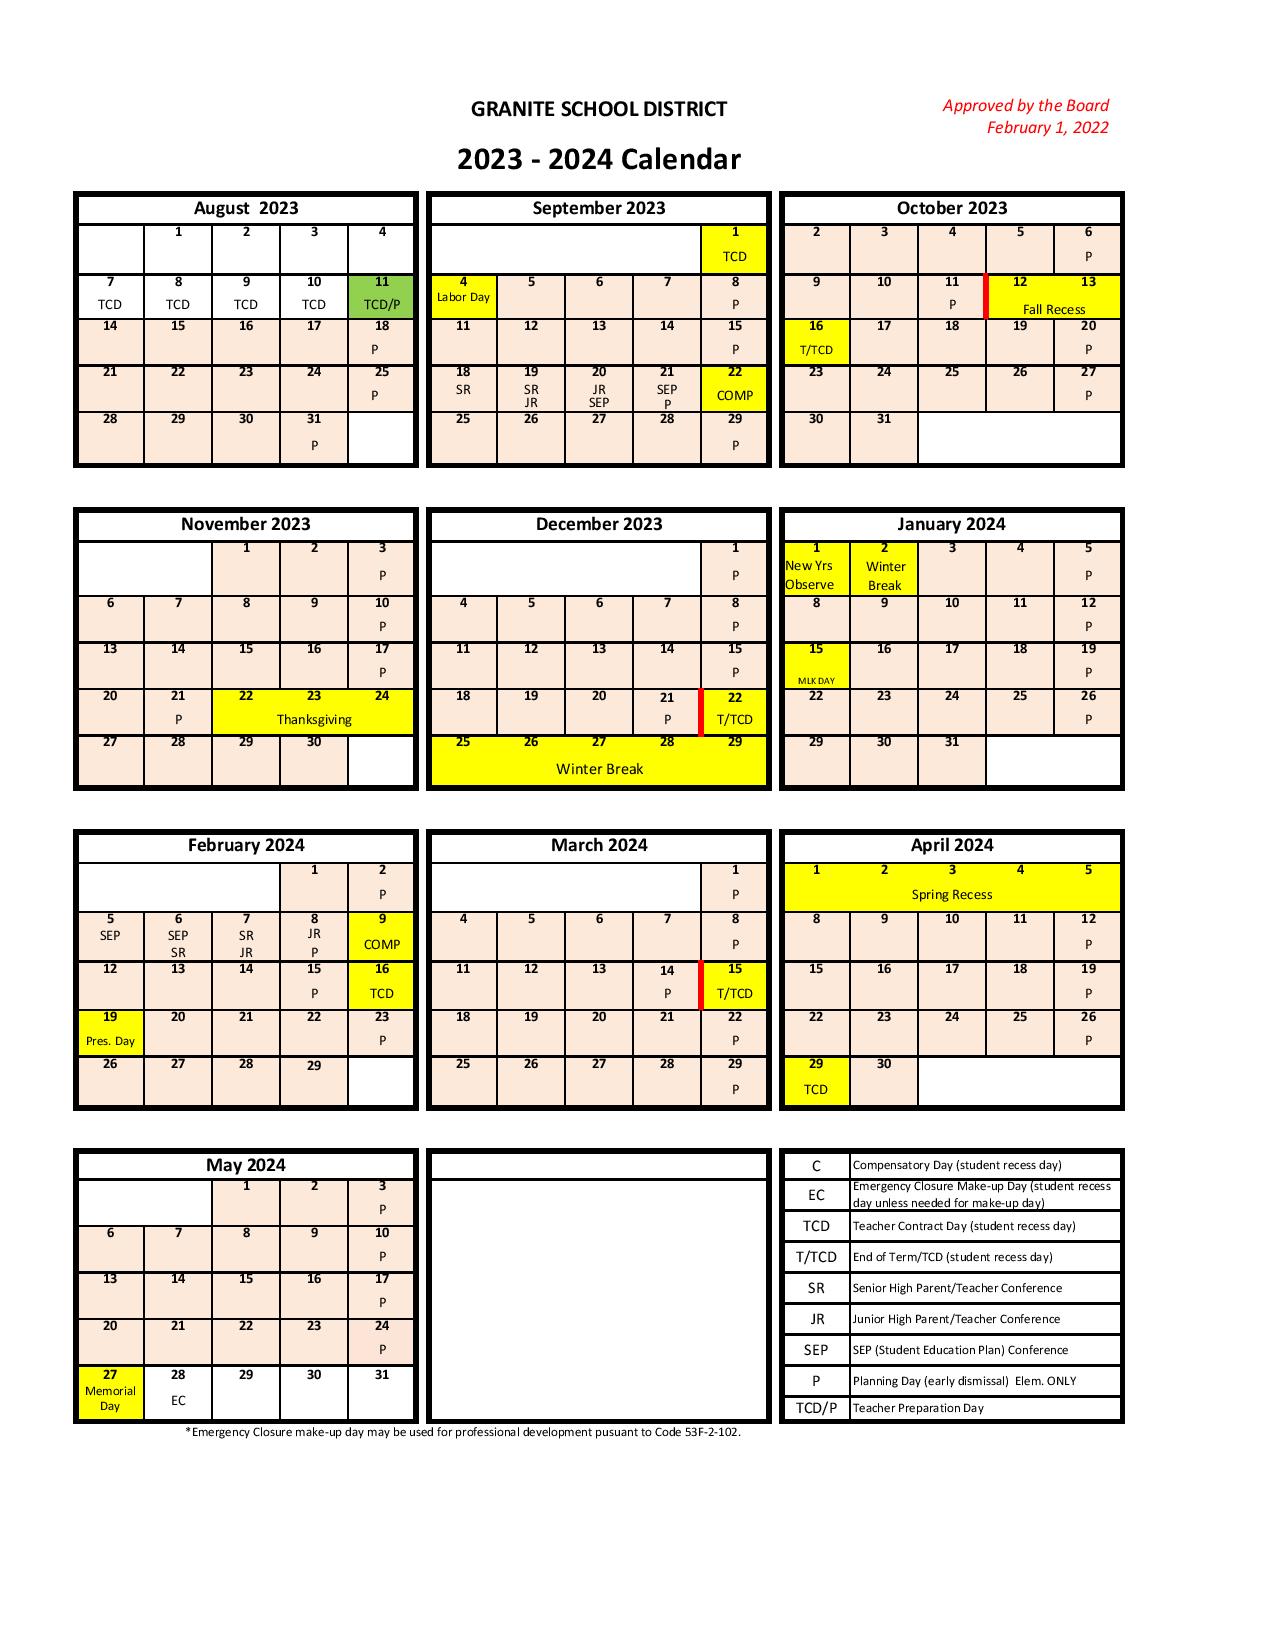 Granite School District Calendar Page 002 